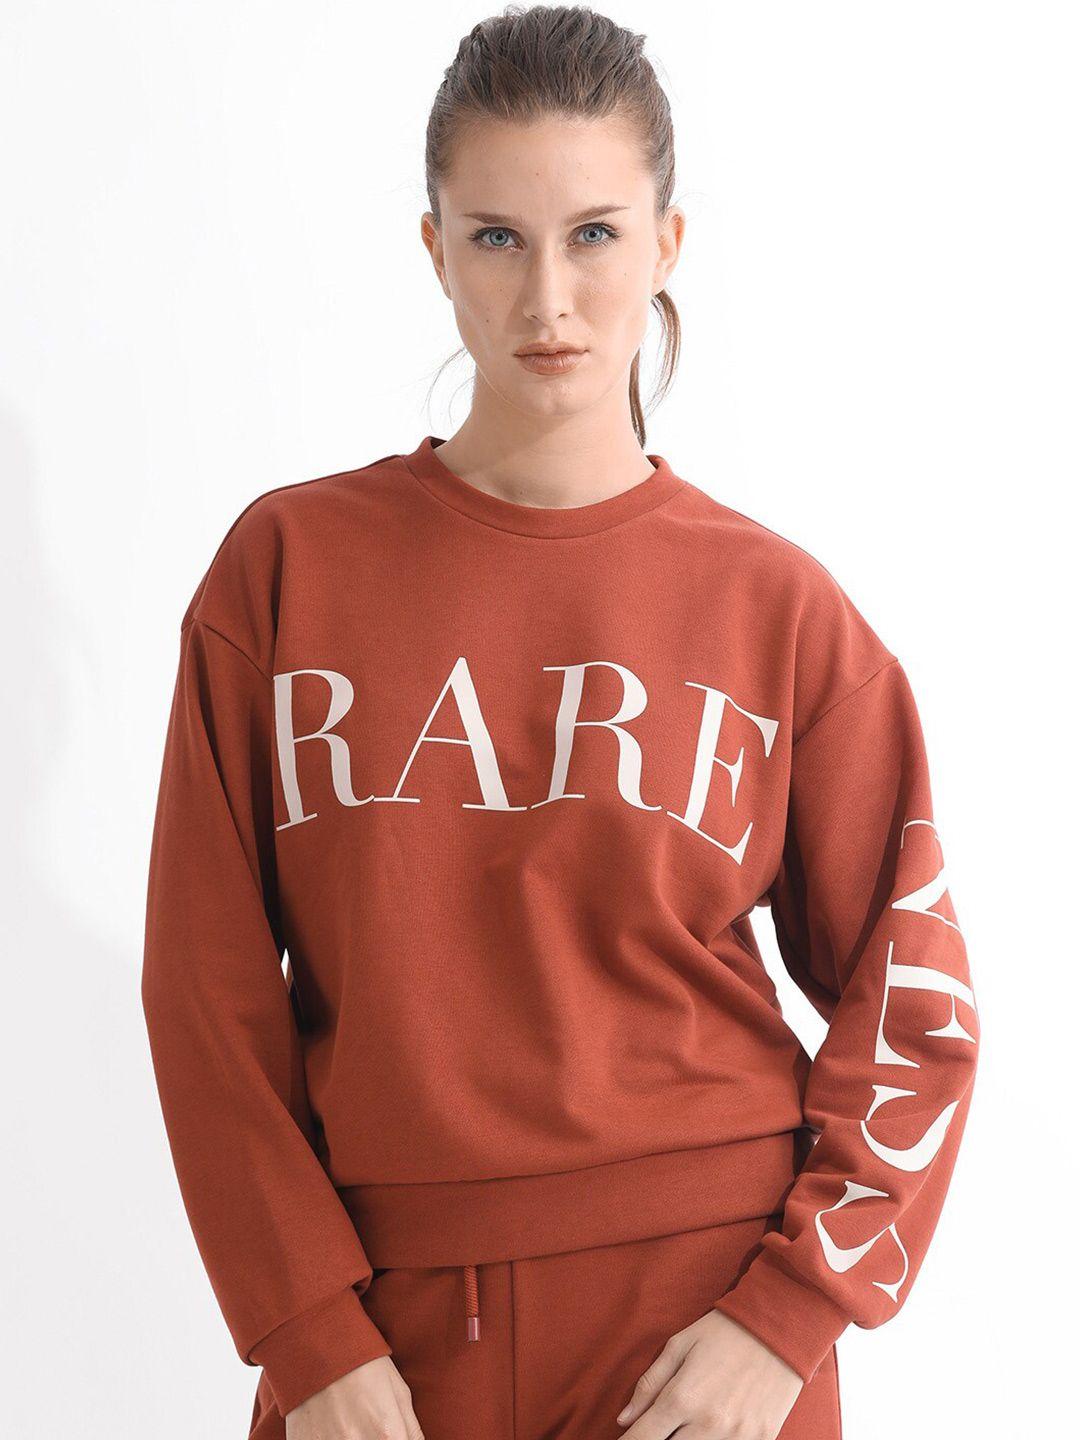 rareism-typographic-printed-cotton-sweatshirt